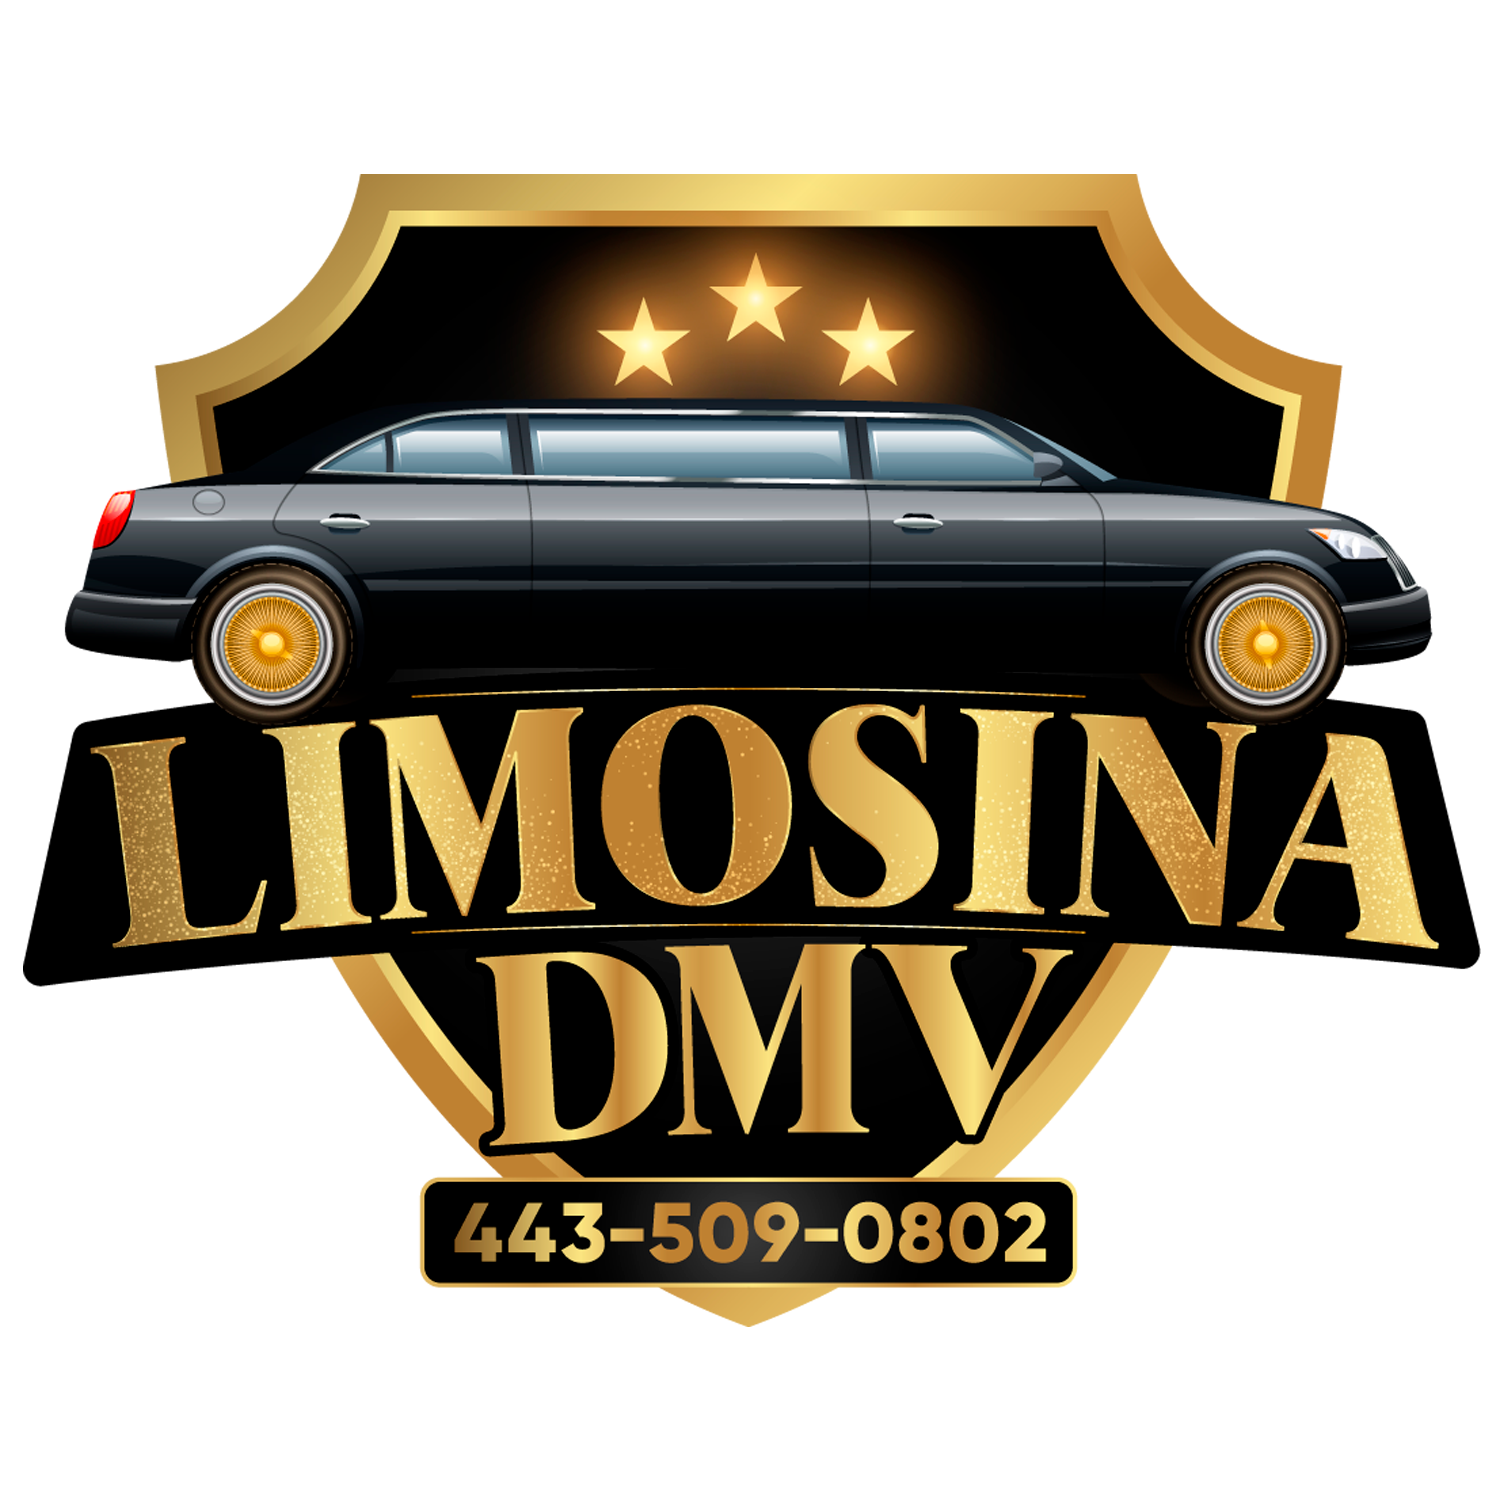 LIMOSINA DMV 443-509-0802